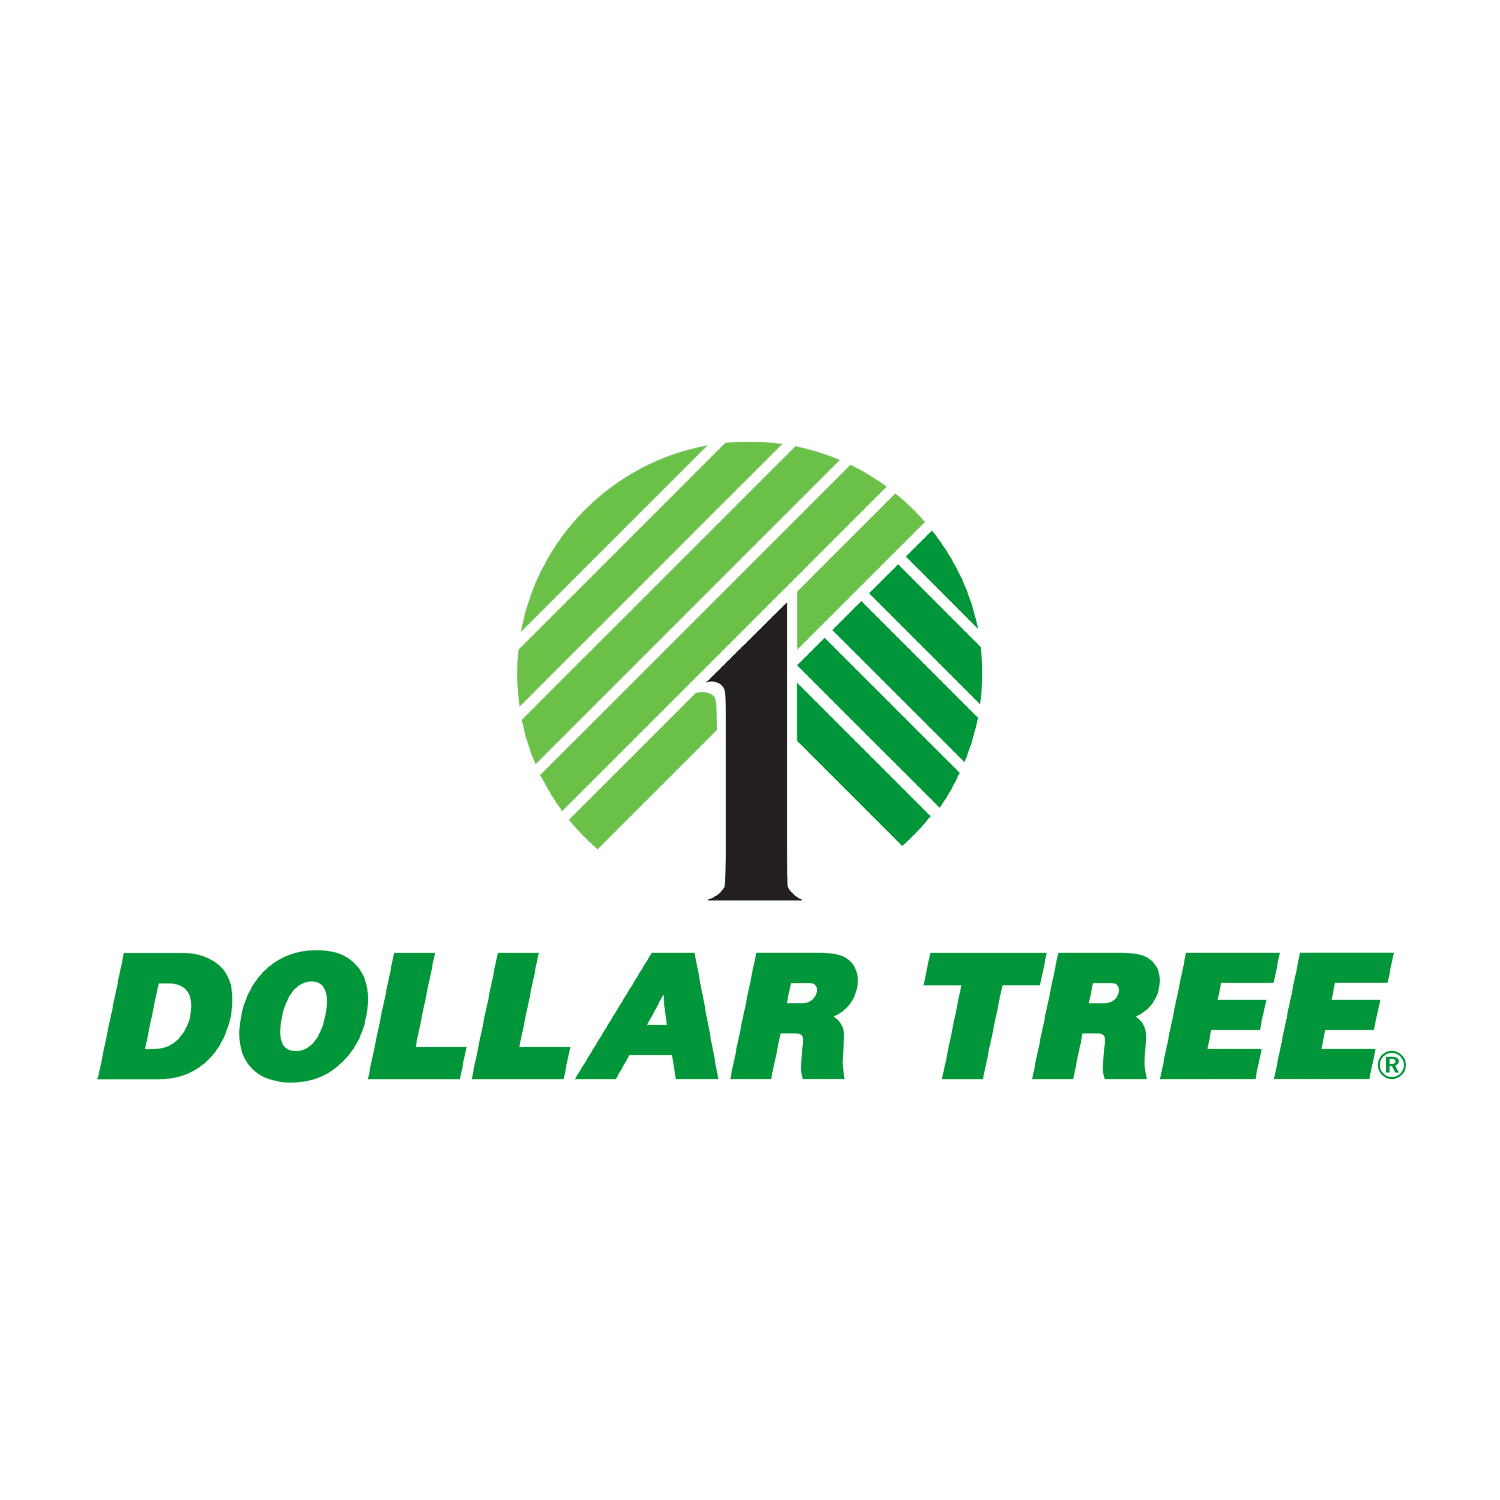 ClientLogos_1500x1500_72-dpi_Dollar-Tree